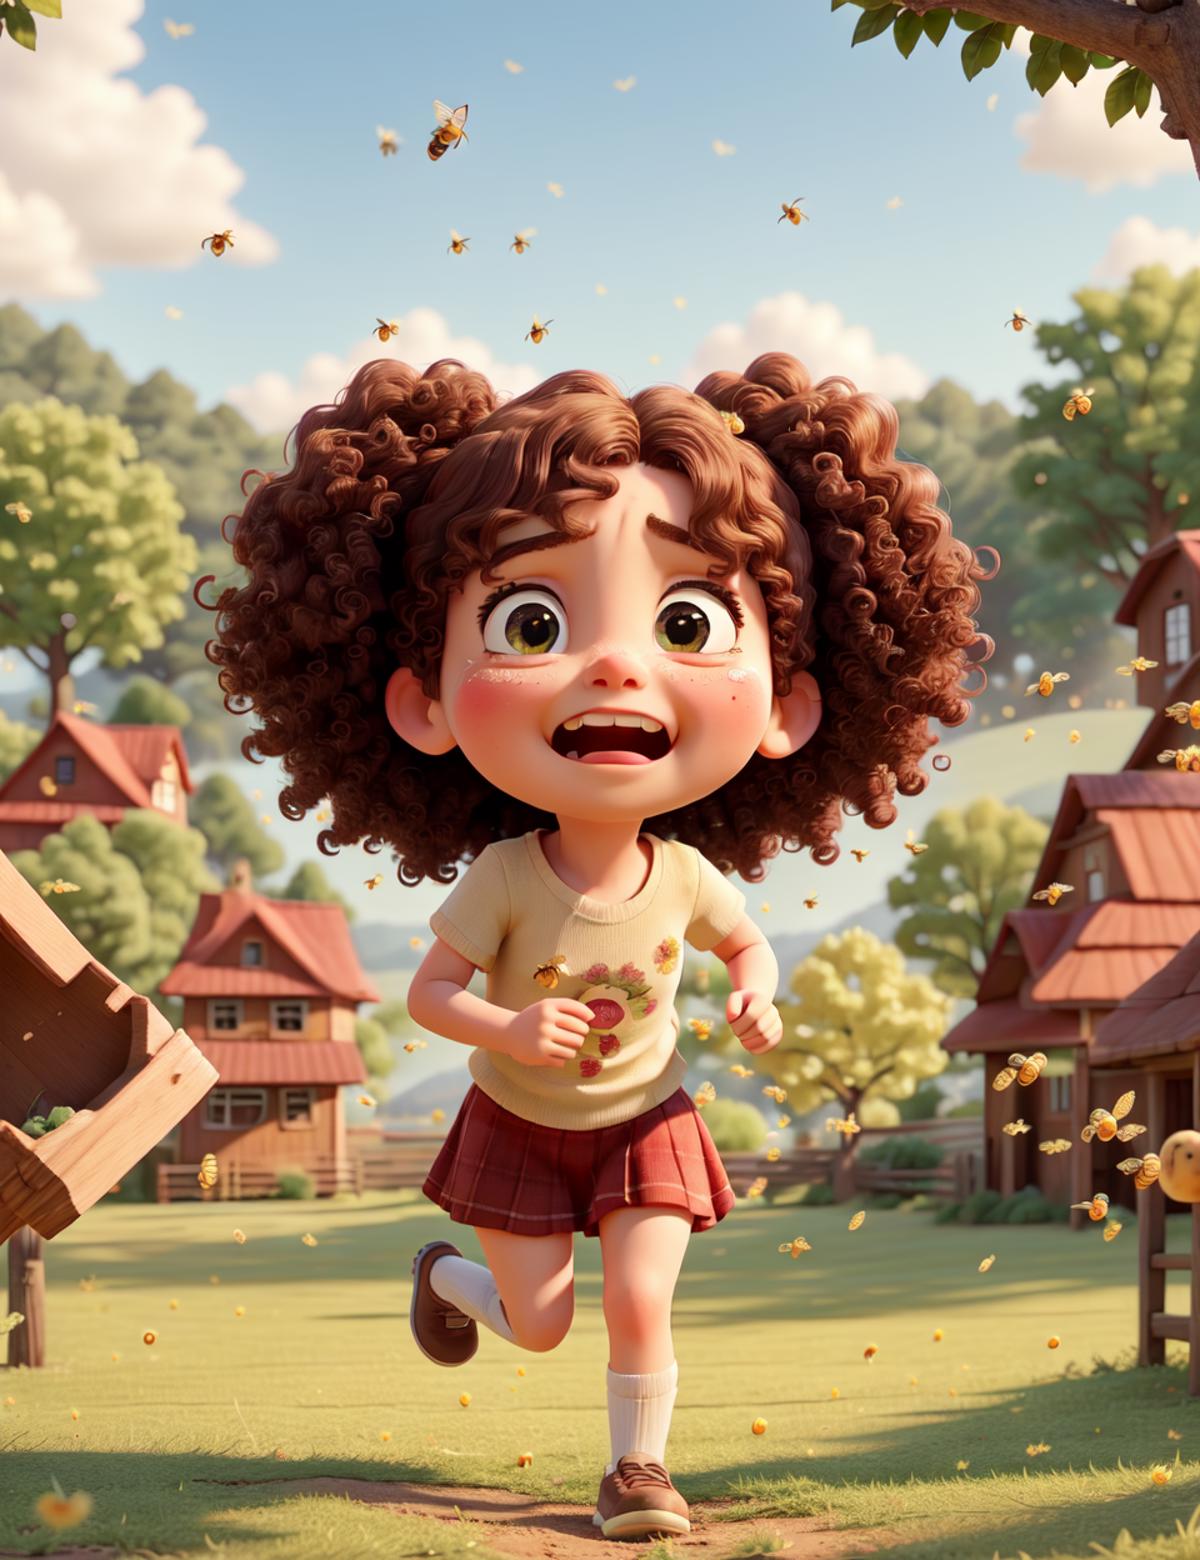 "A Cartoon Girl Running Through a Field of Flowers in a Small Town"